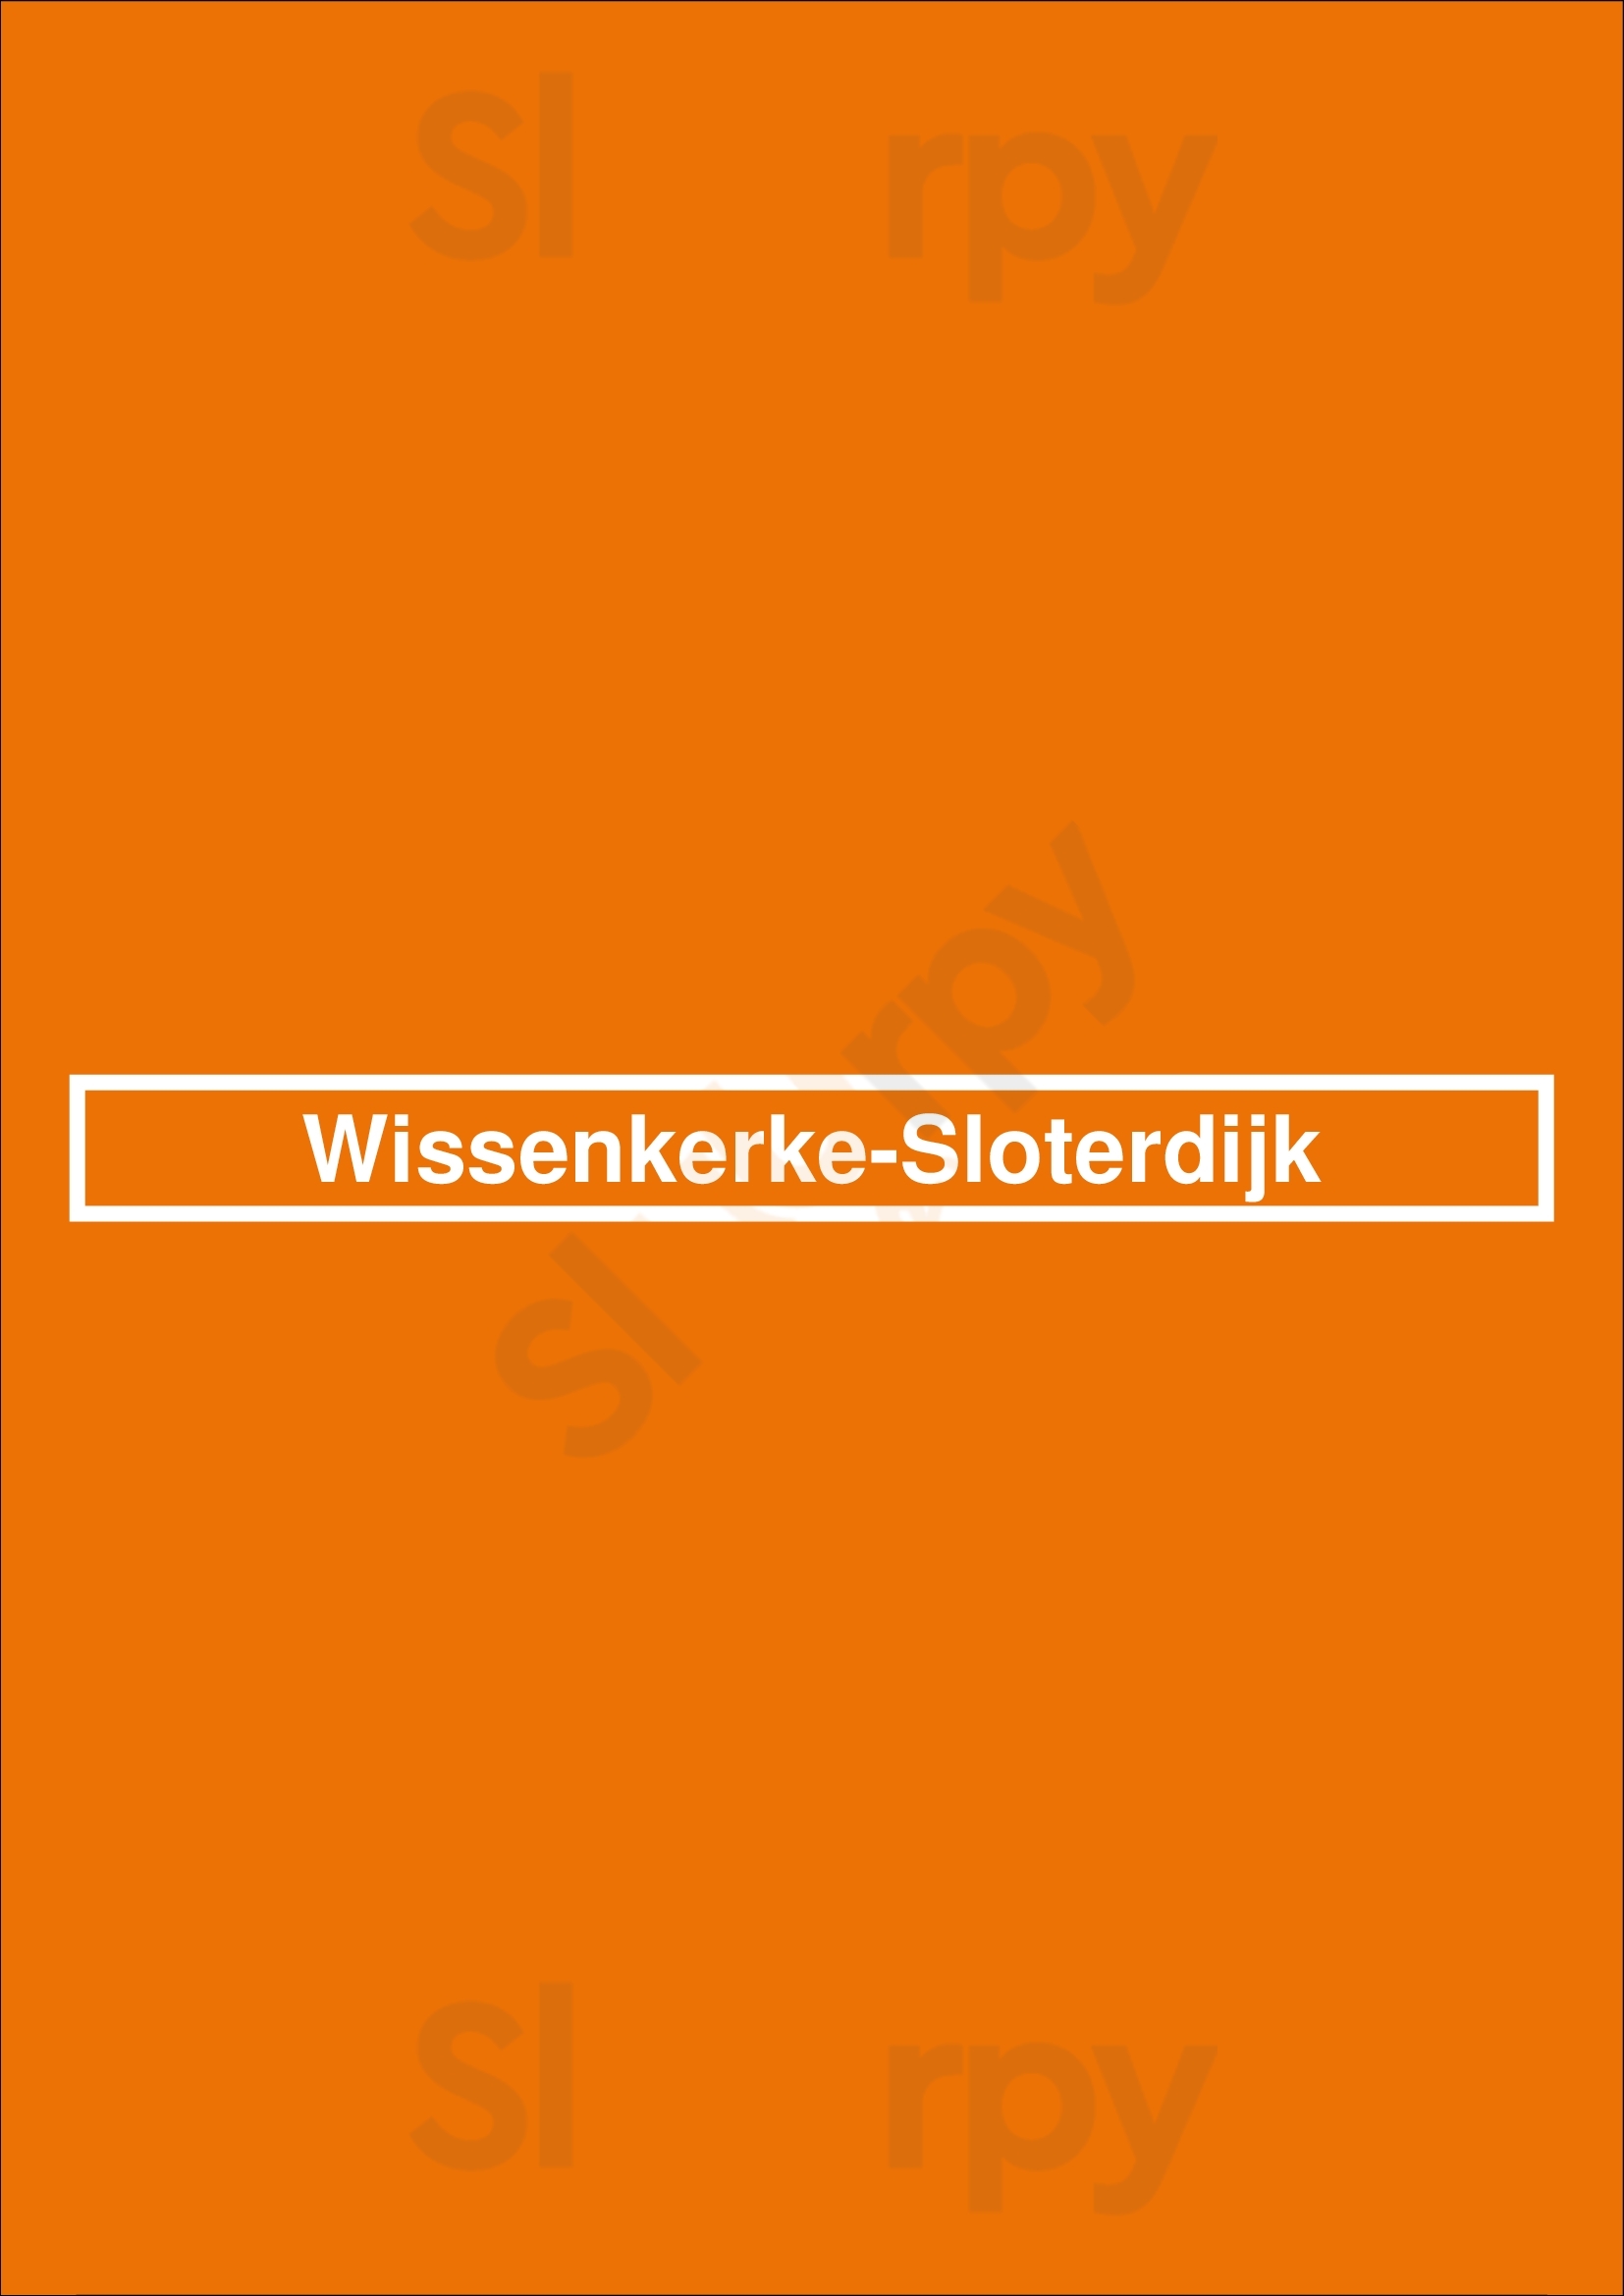 Wissenkerke-sloterdijk Amsterdam Menu - 1